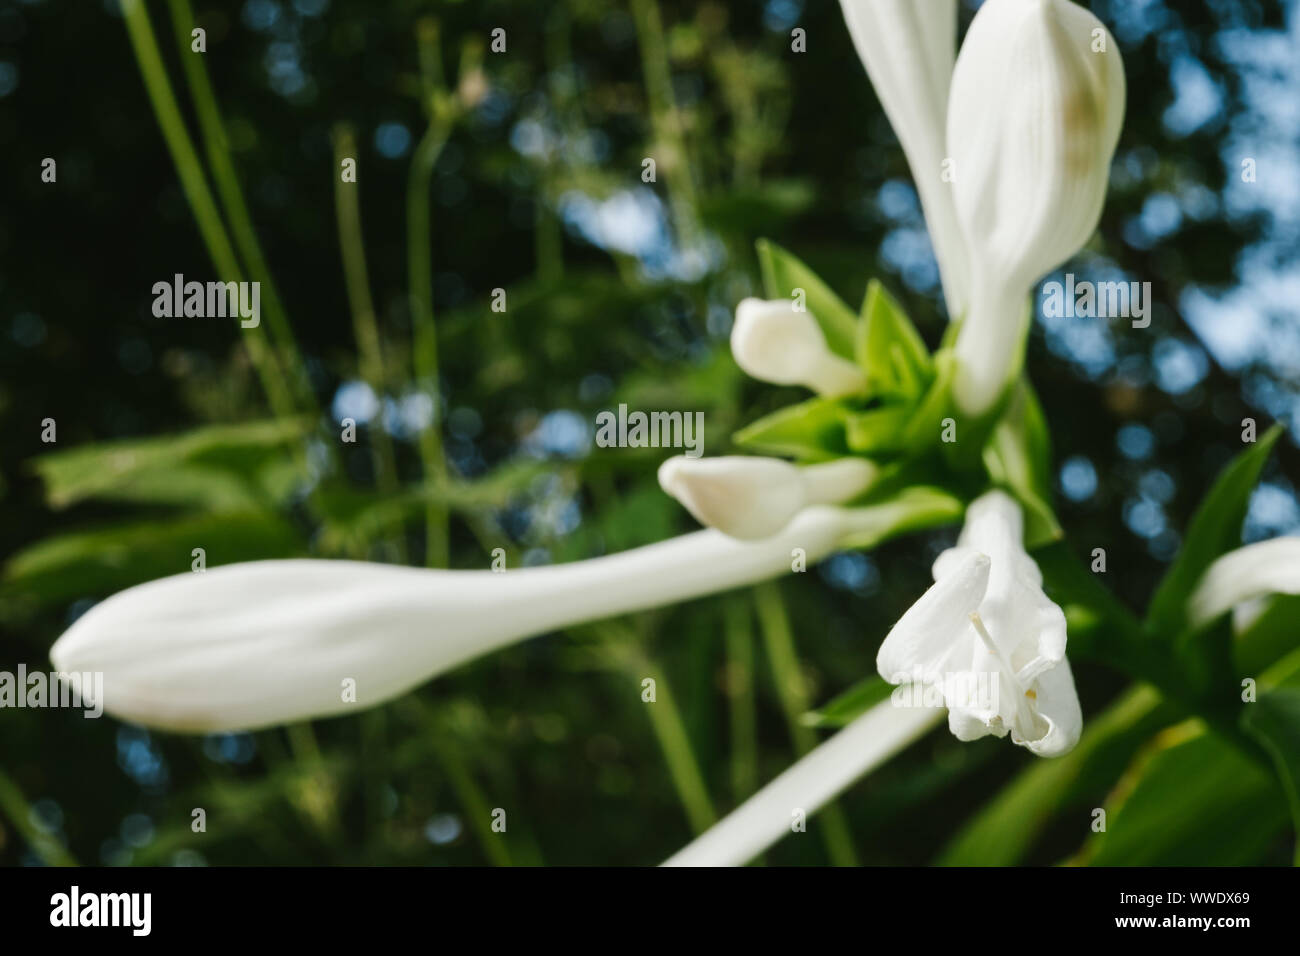 Hosta is in bloom. White flower in the garden. Stock Photo